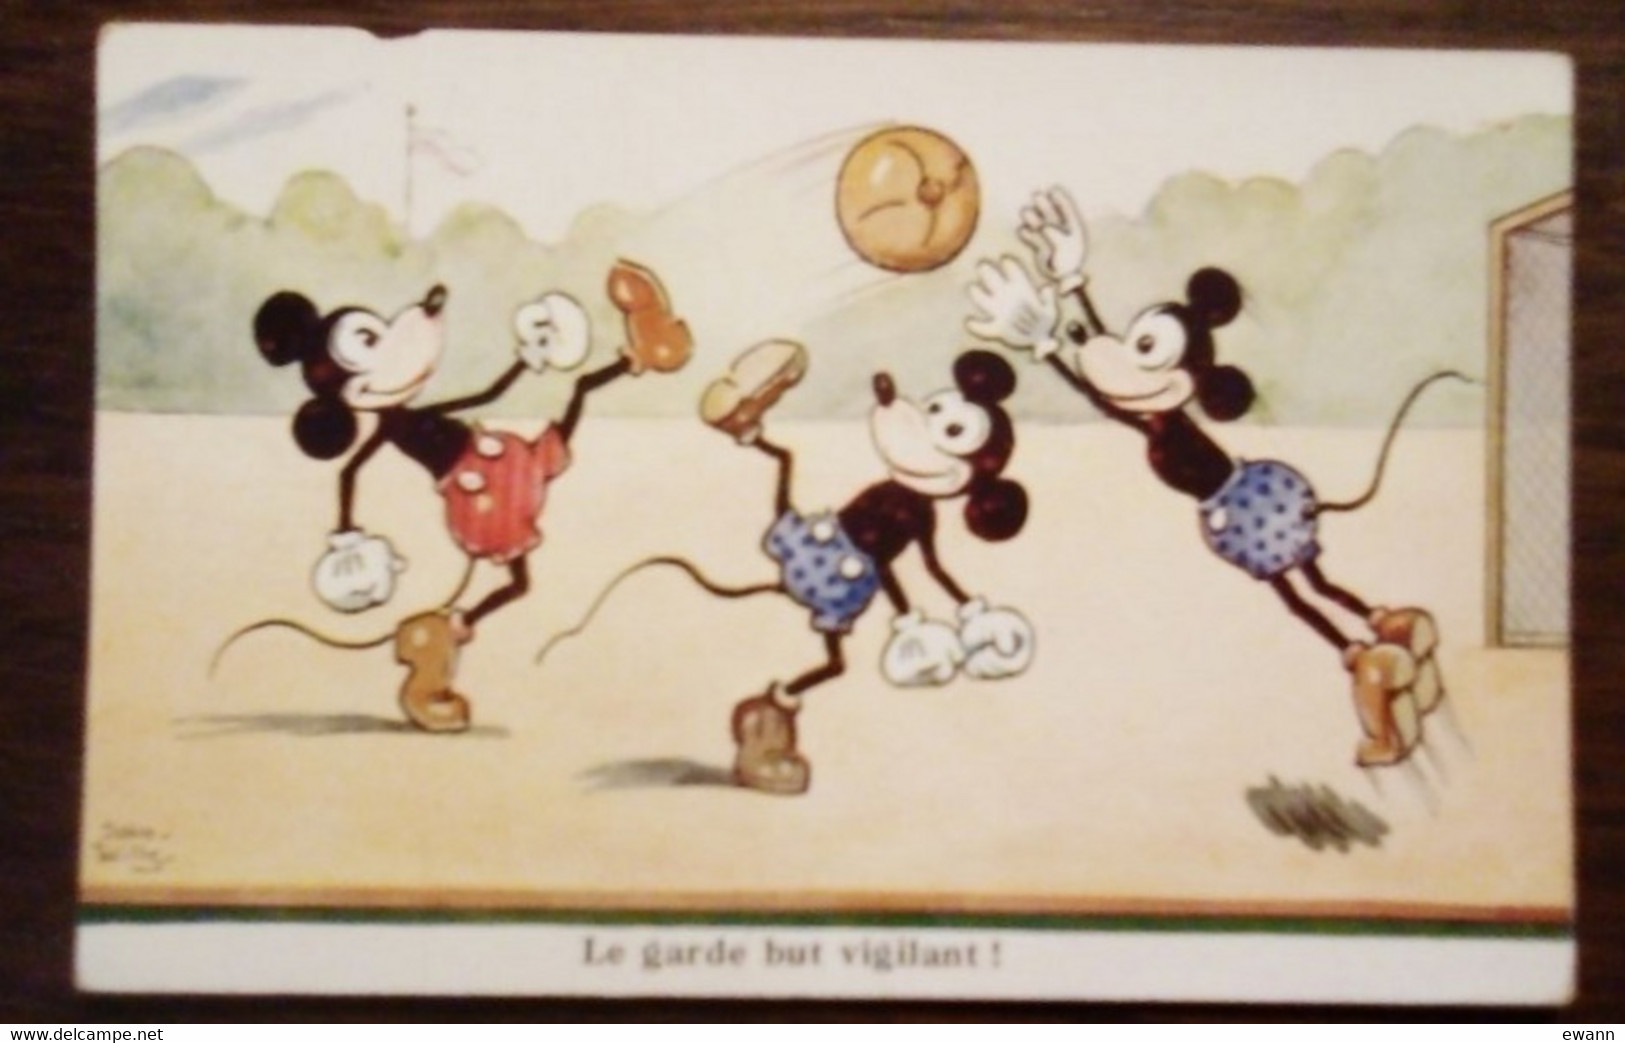 Carte Postale Ancienne- John Wills  -Mickey " Le Garde But Vigilant!" - Wills, John